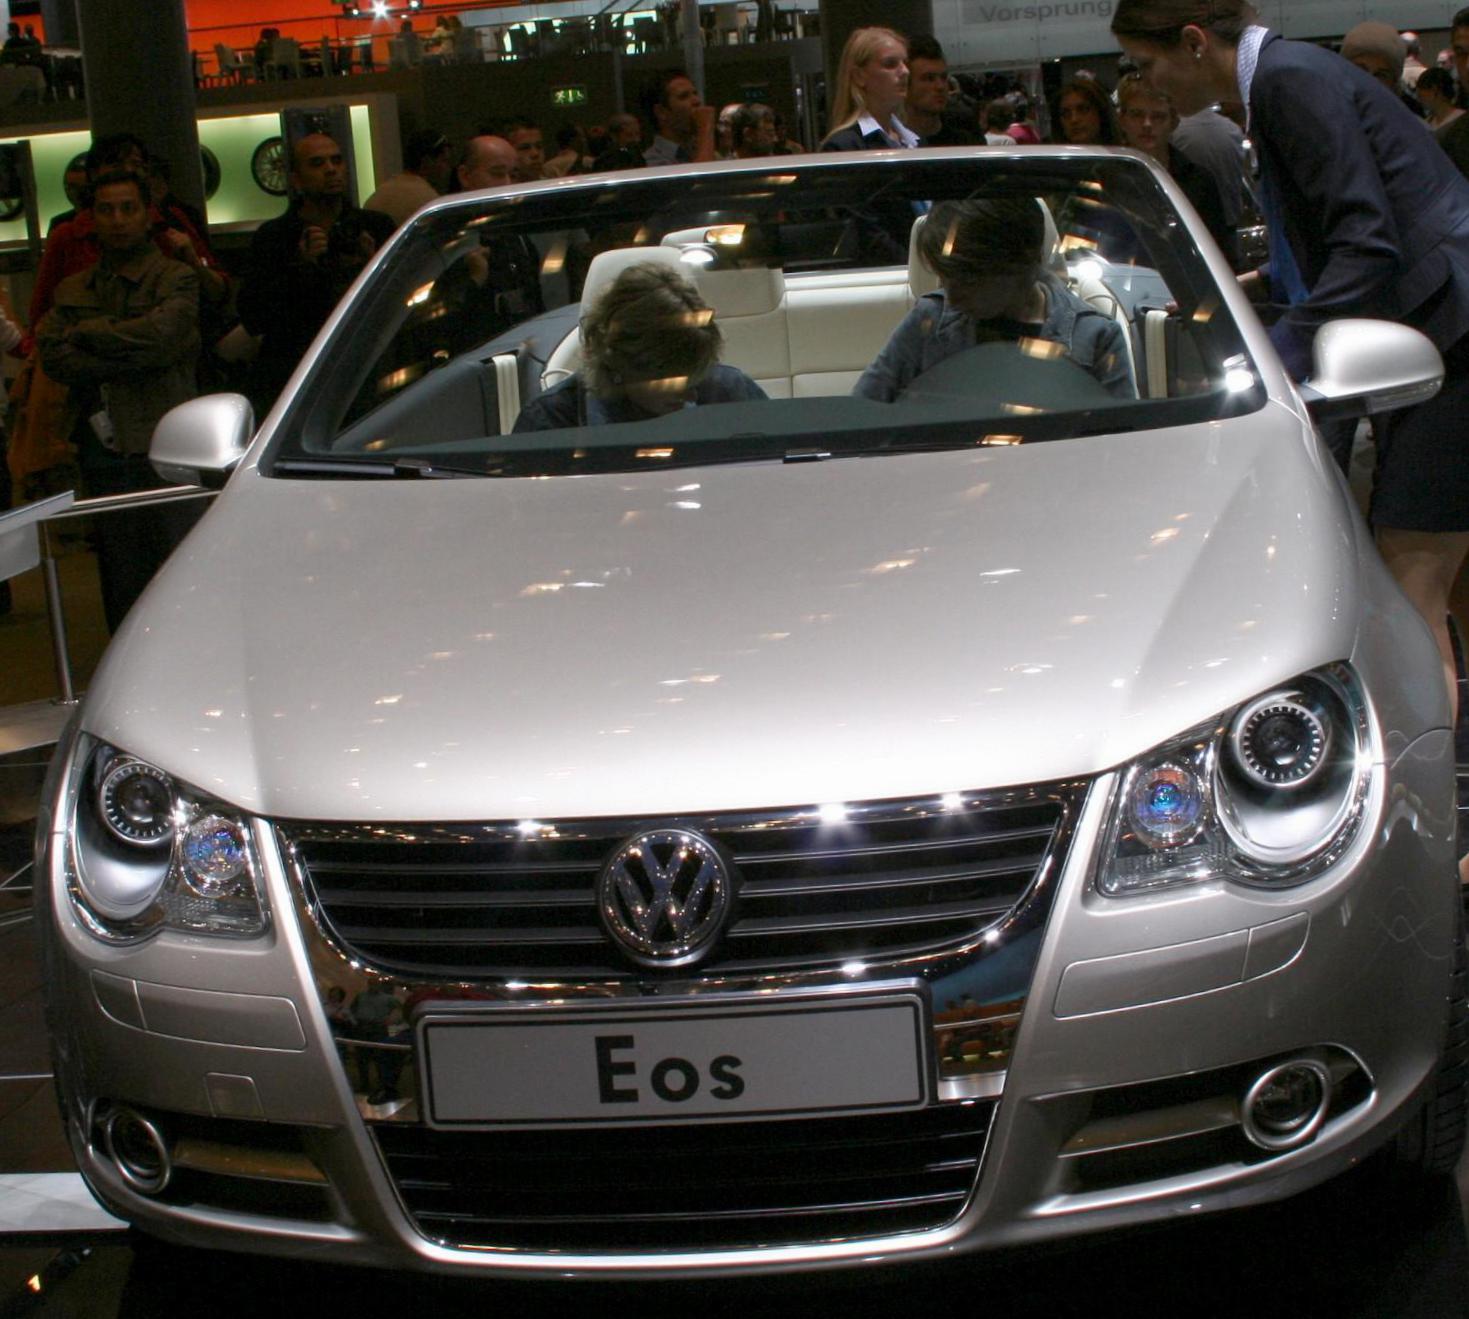 Eos Volkswagen model suv